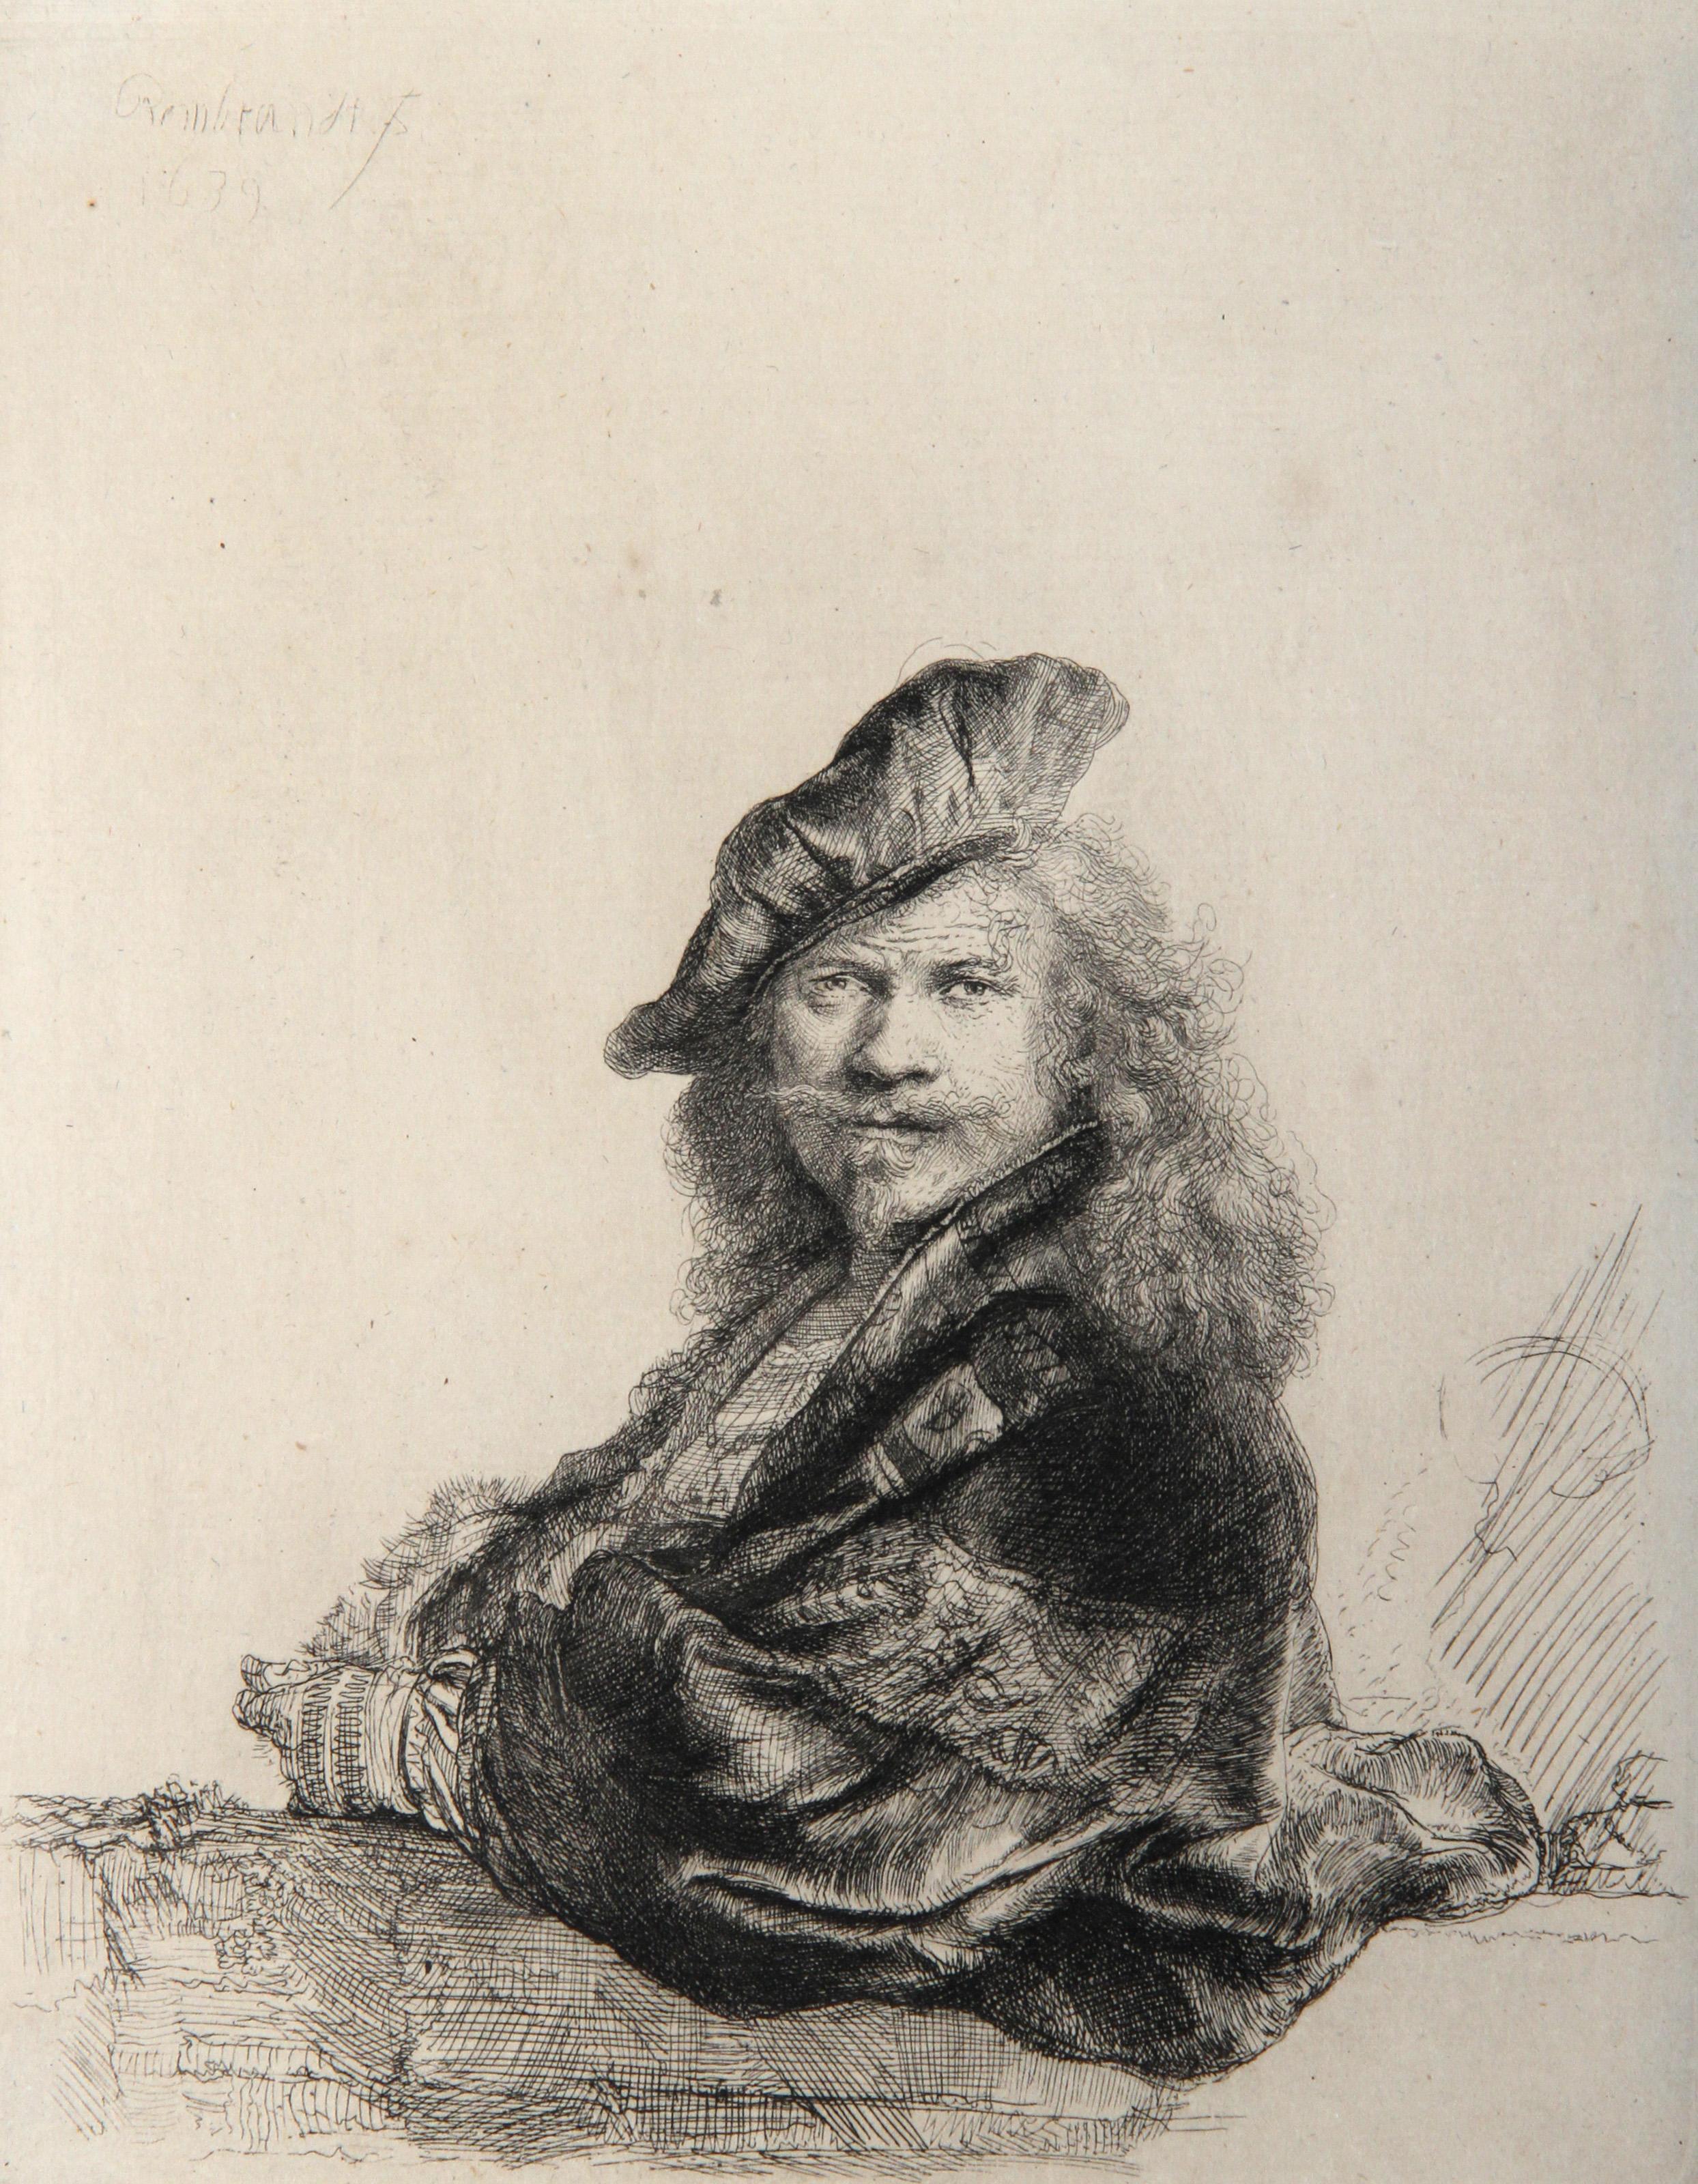 Rembrandt van Rijn, After by Amand Durand, Dutch (1606 - 1669) -  Rembrandt Appuye (B21). Year: 1878 (of original 1639), Medium: Heliogravure, Size: 8  x 6.5 in. (20.32  x 16.51 cm), Printer: Amand Durand, Description: French Engraver and painter